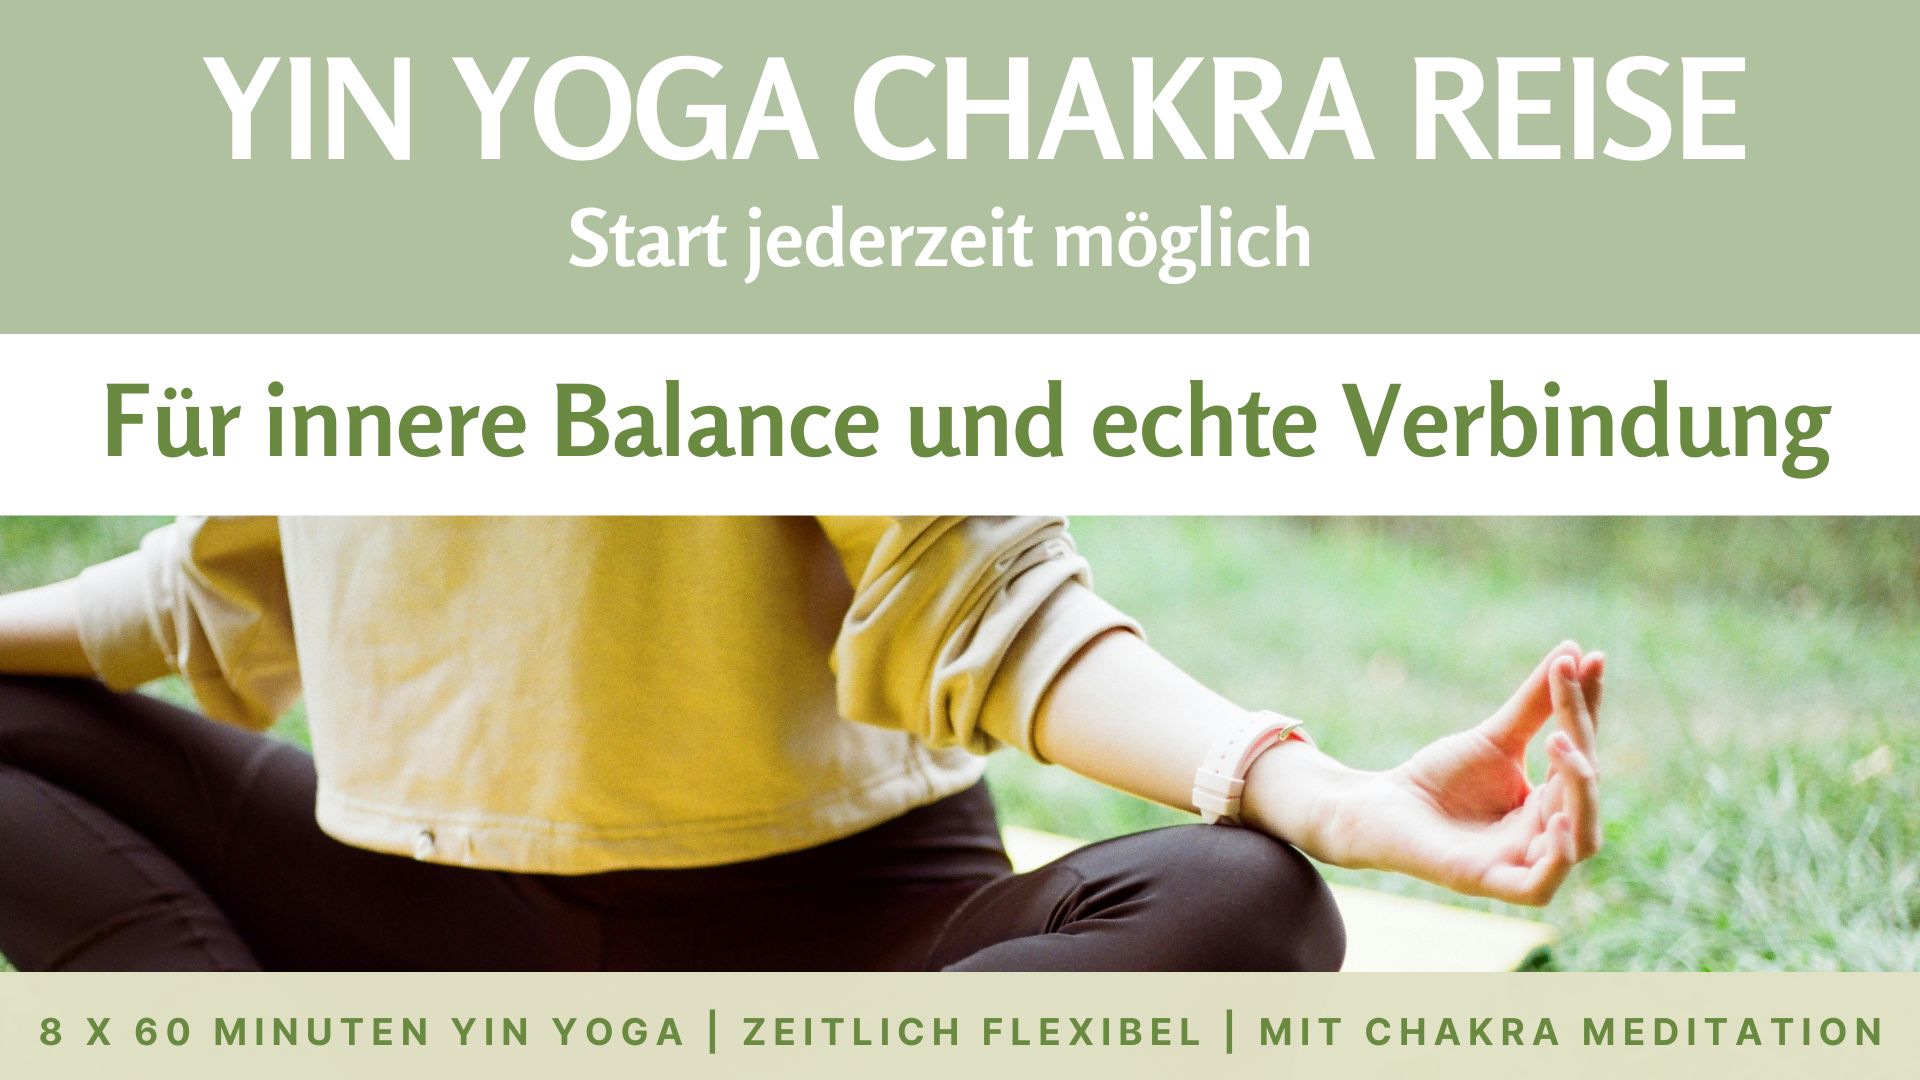 Yin Yoga Chakra Reise: Innere Balance und echte Verbindung